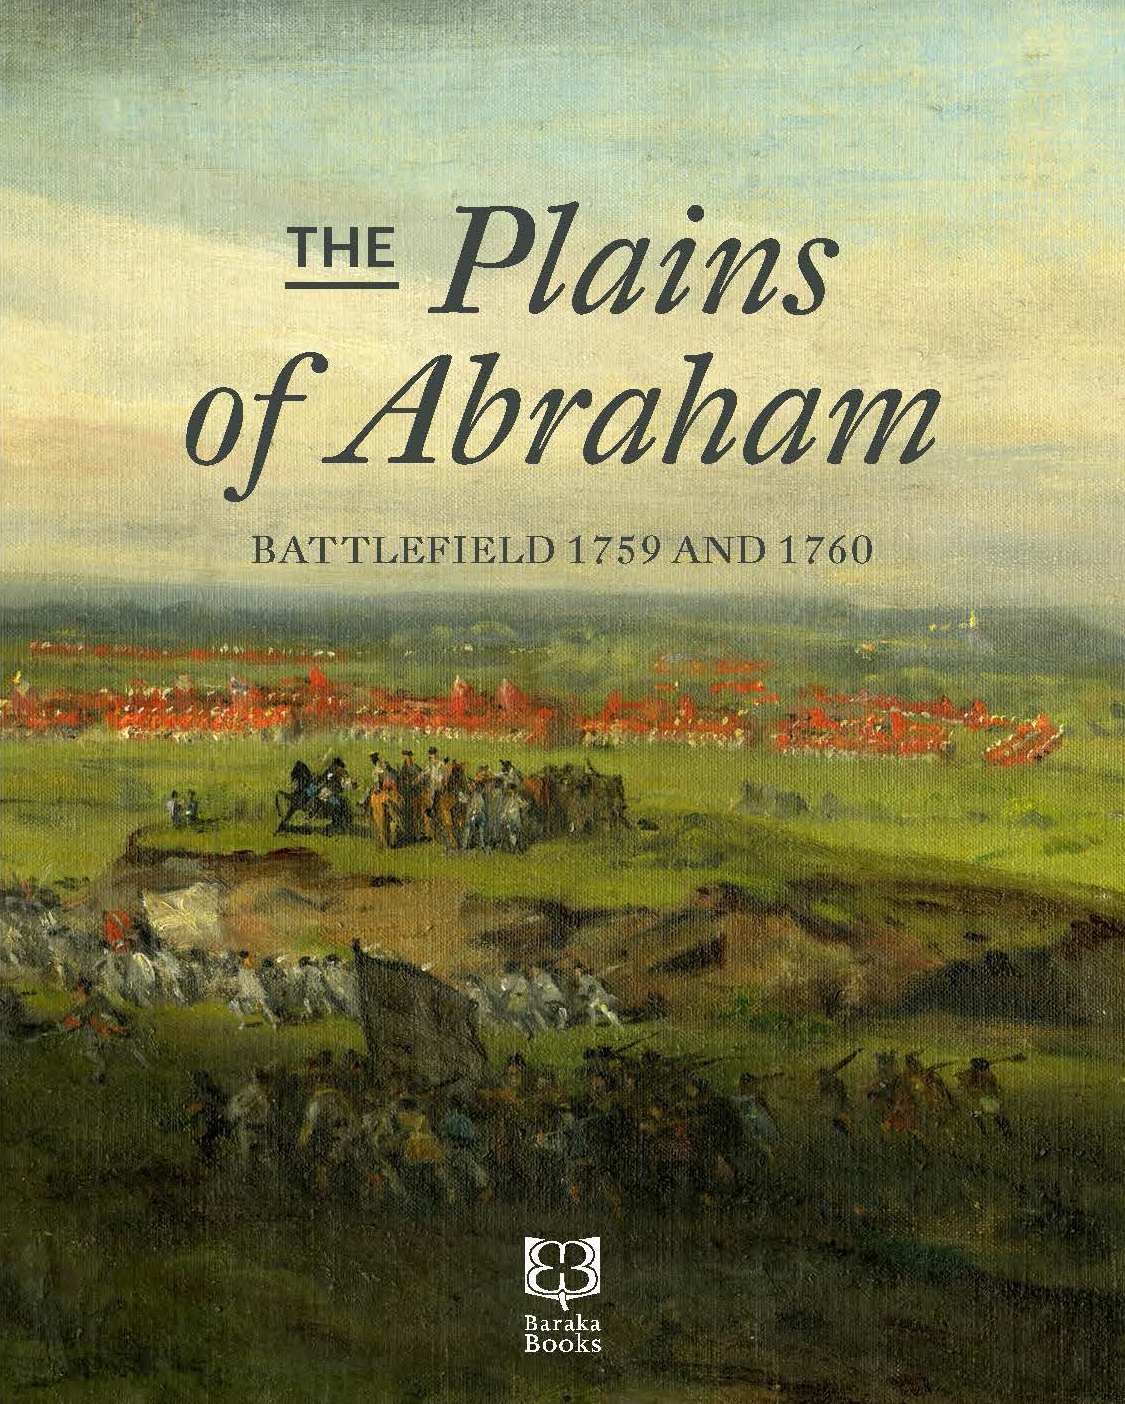 The Plains of Abraham